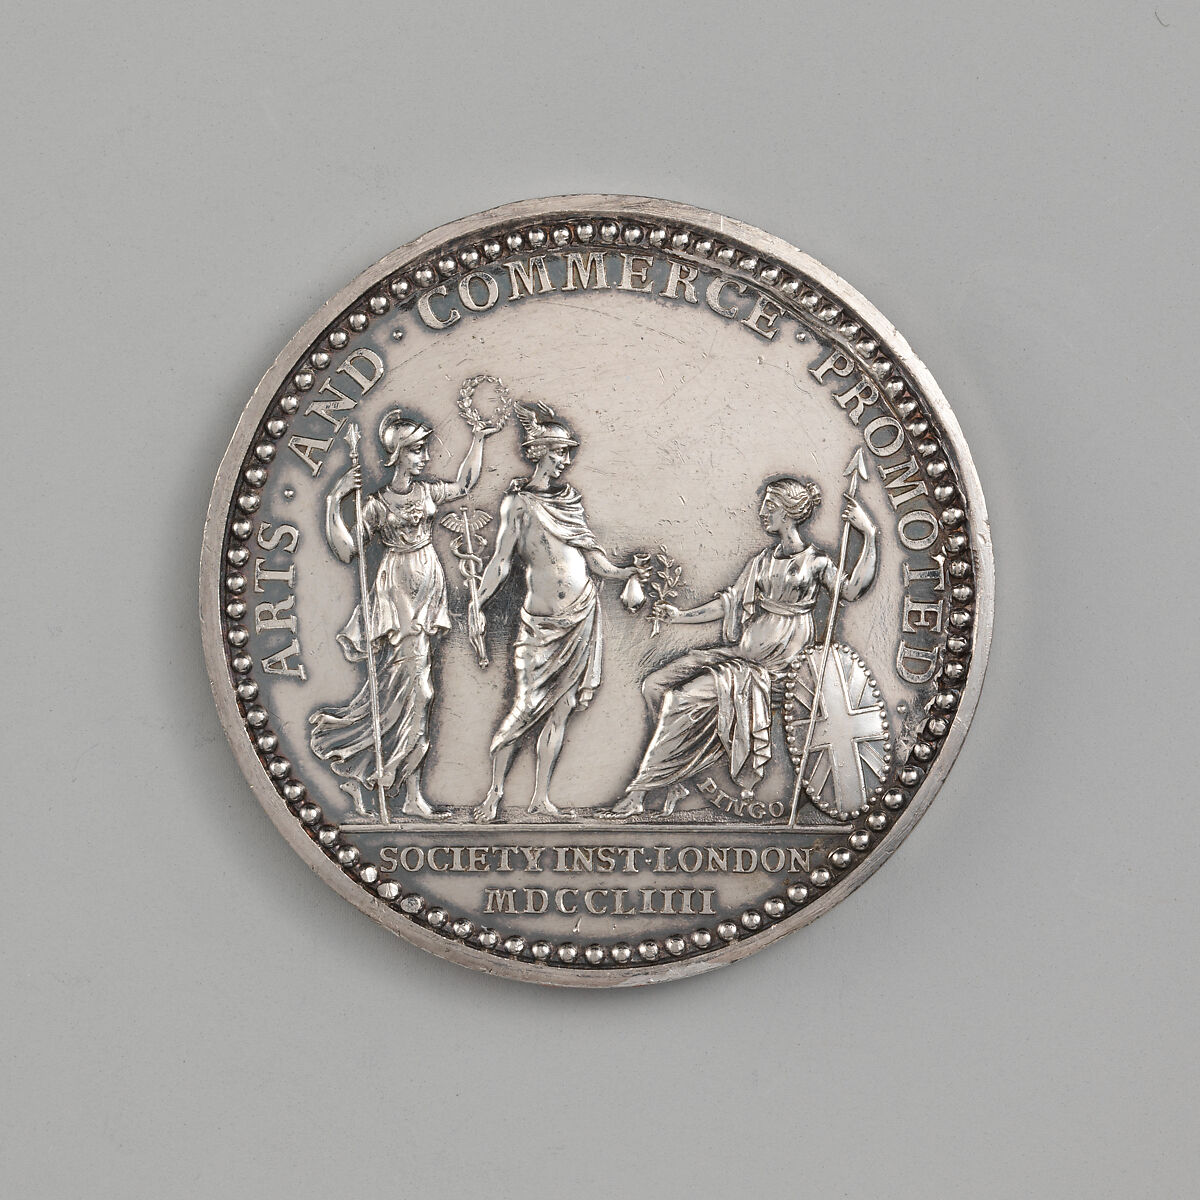 London Royal Society of Arts Medal, Medalist: Thomas Pingo (Italian, 1692–1776, active England after 1742), Silver, British 